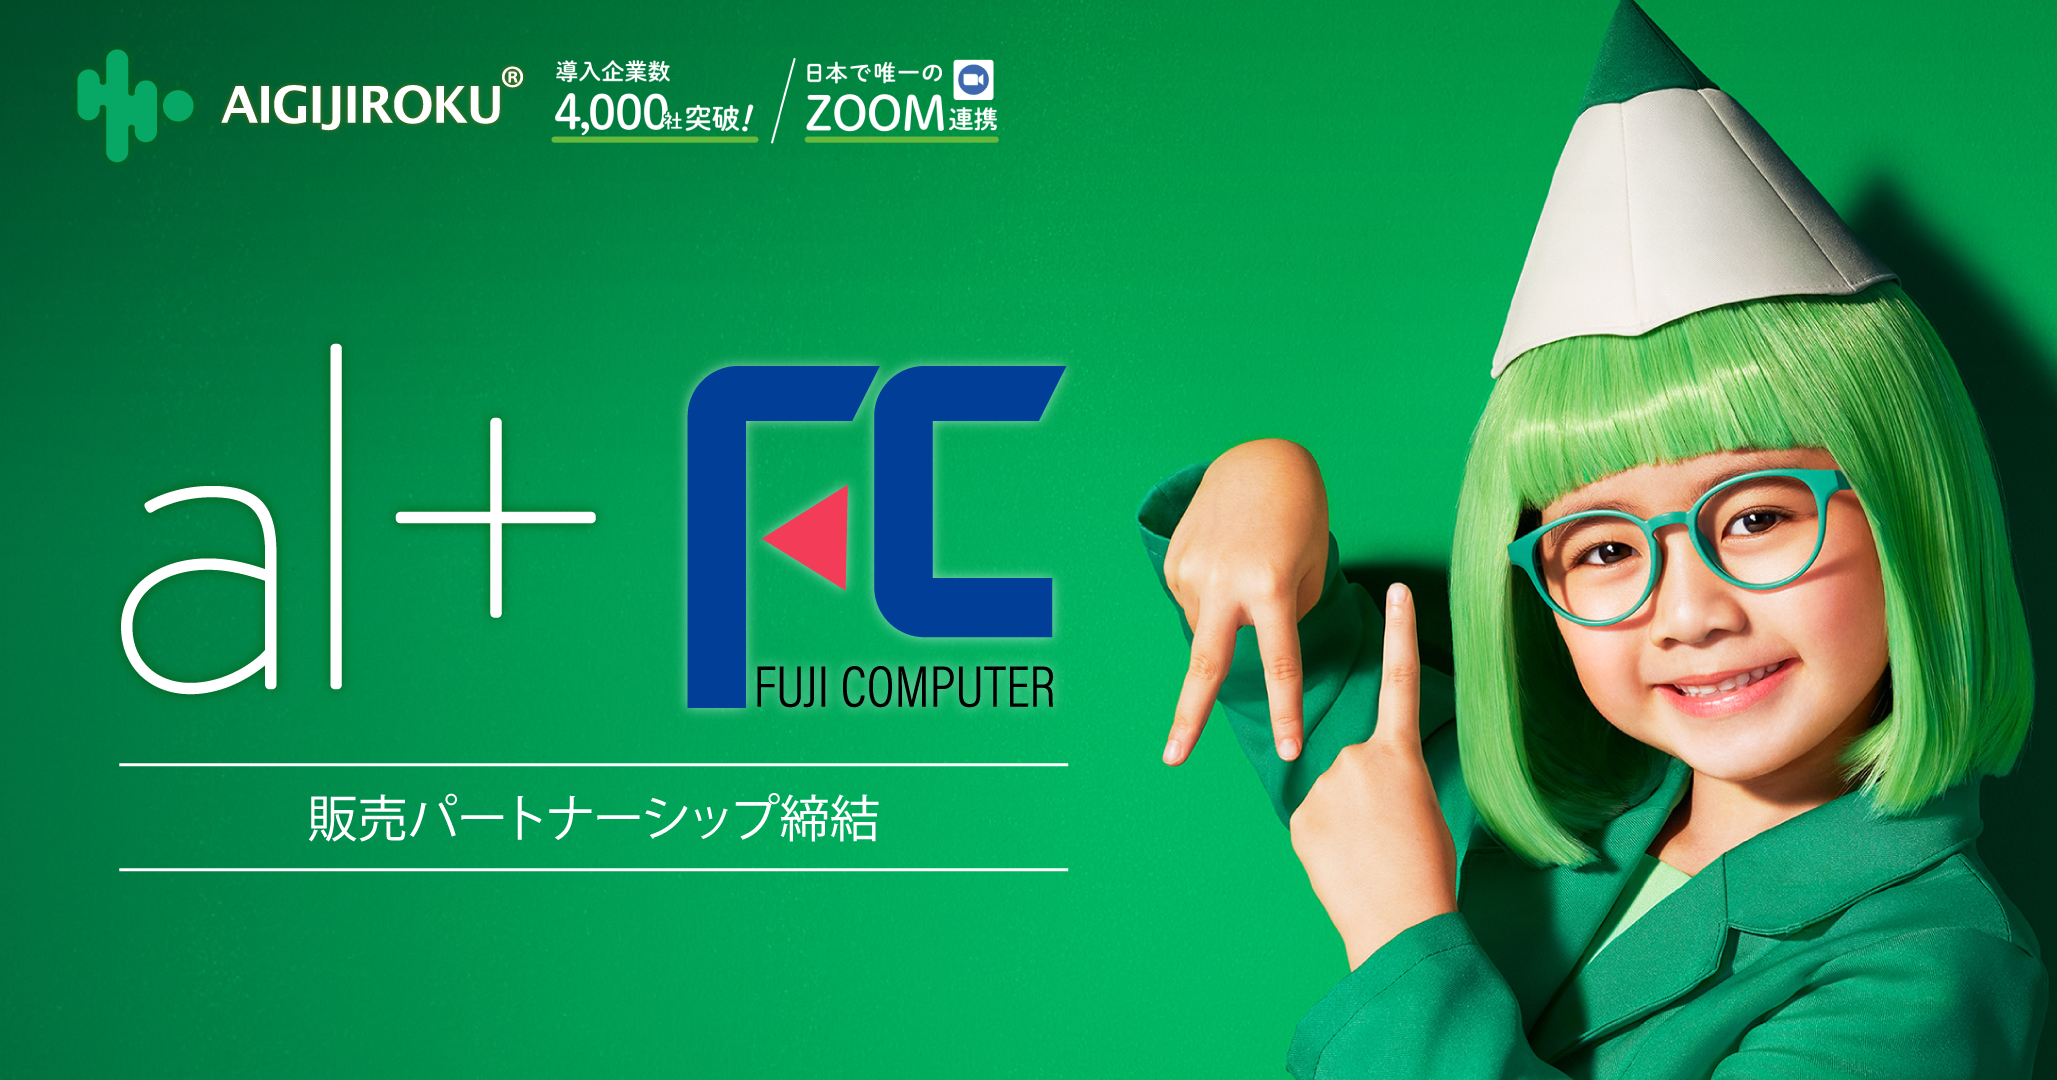 ai-gijiroku-fujicomputer-fb.png